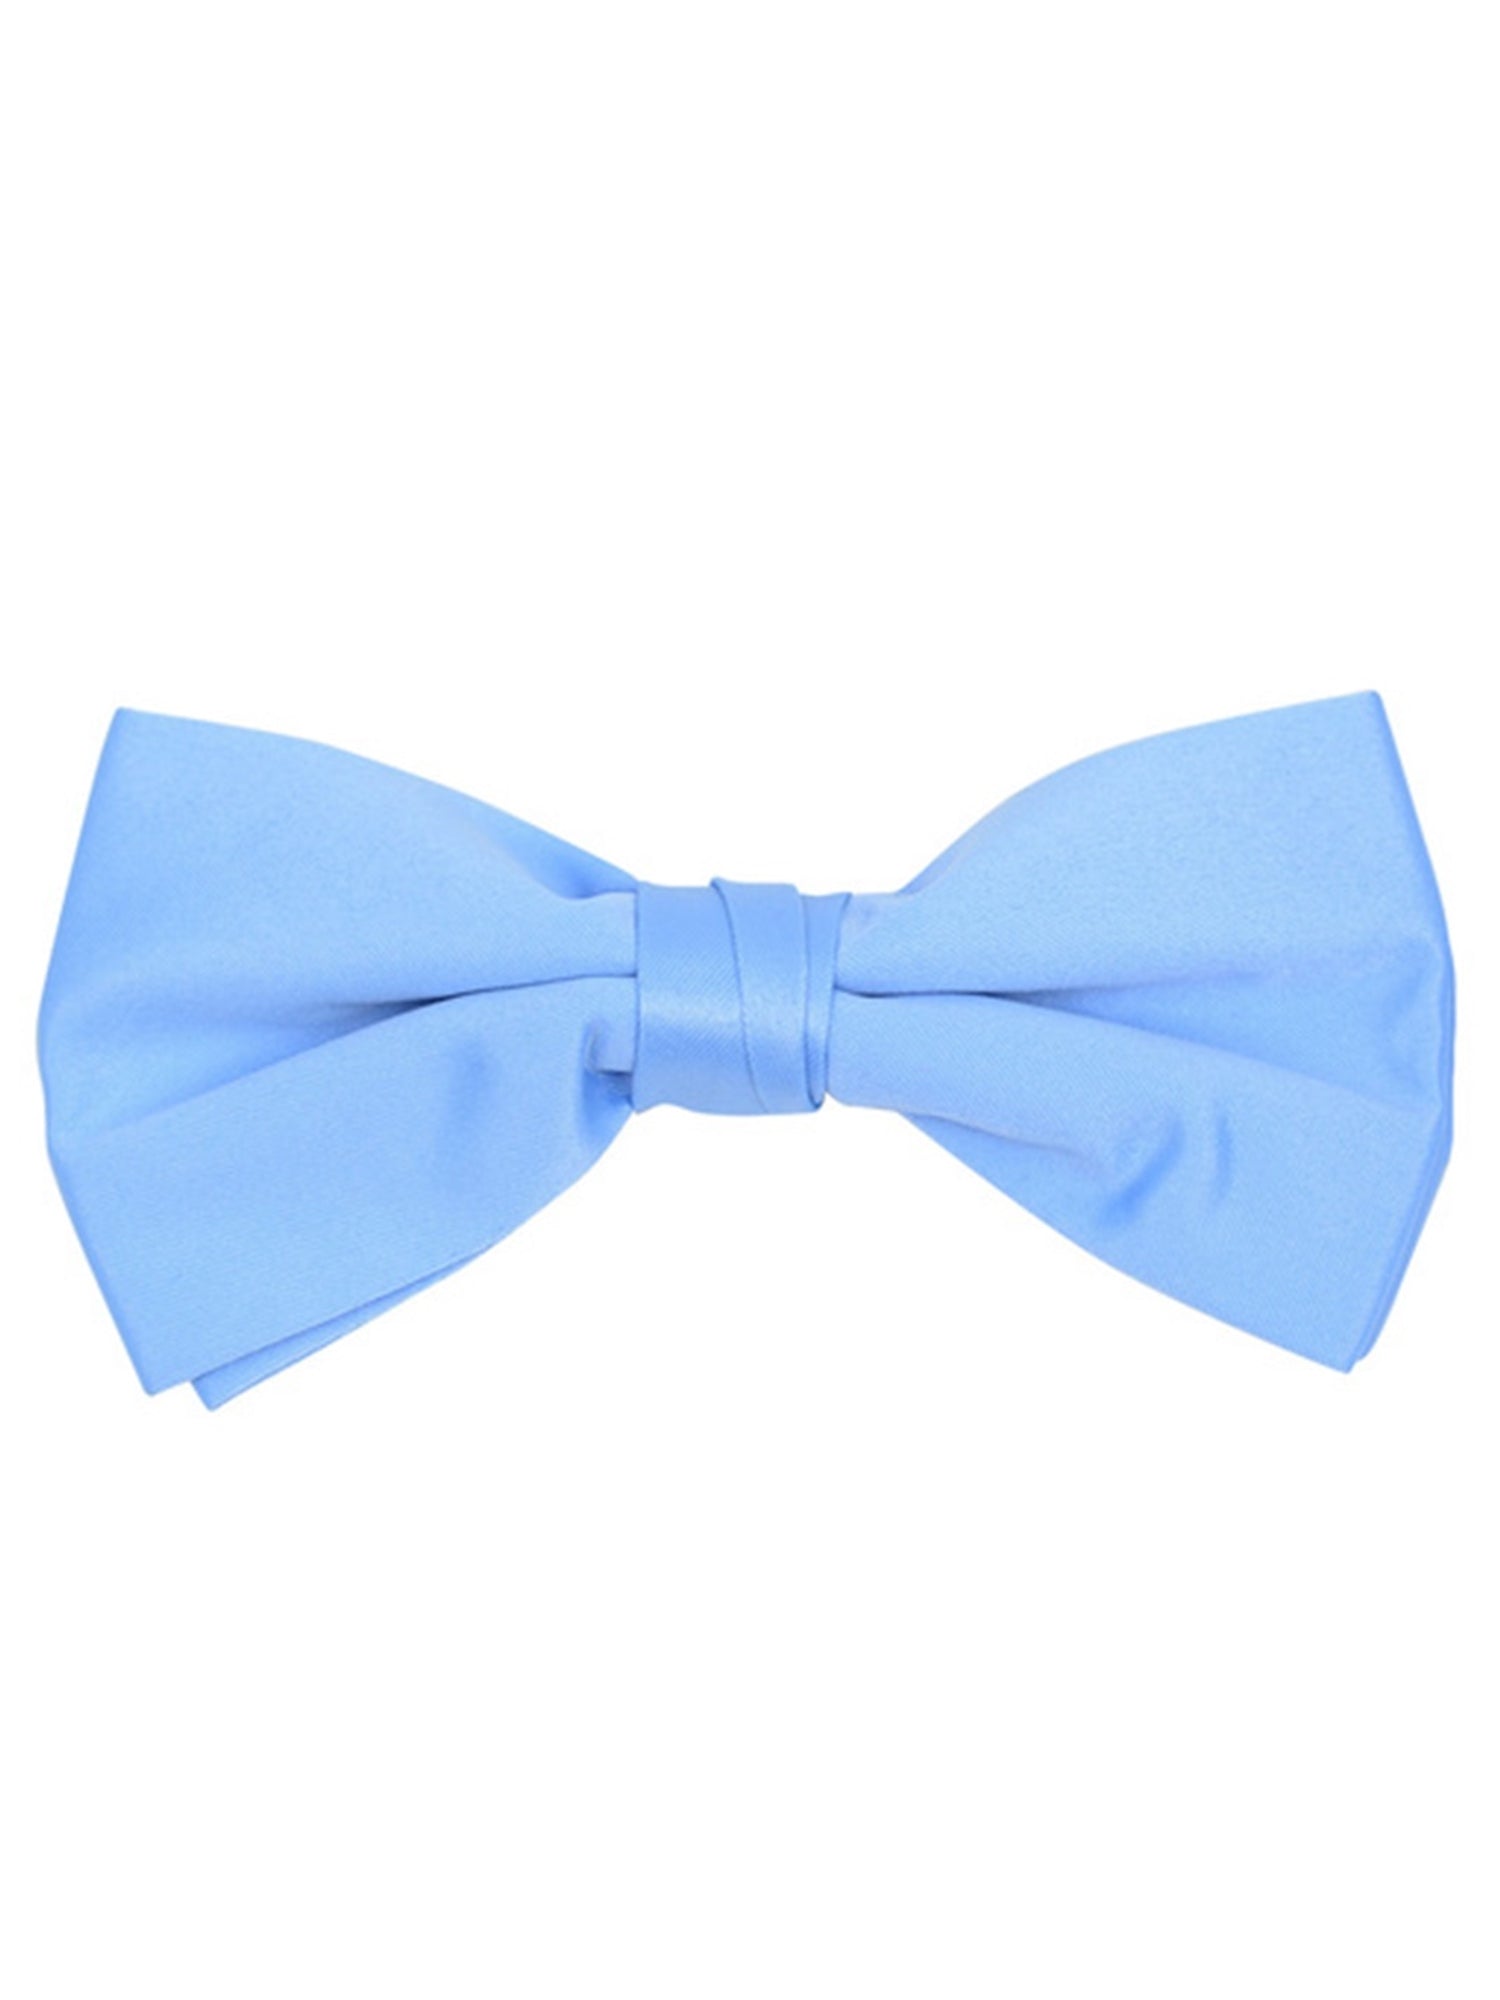 Men's Pre-tied Clip On Bow Tie - Formal Tuxedo Solid Color Men's Solid Color Bow Tie TheDapperTie Sky Blue One Size 